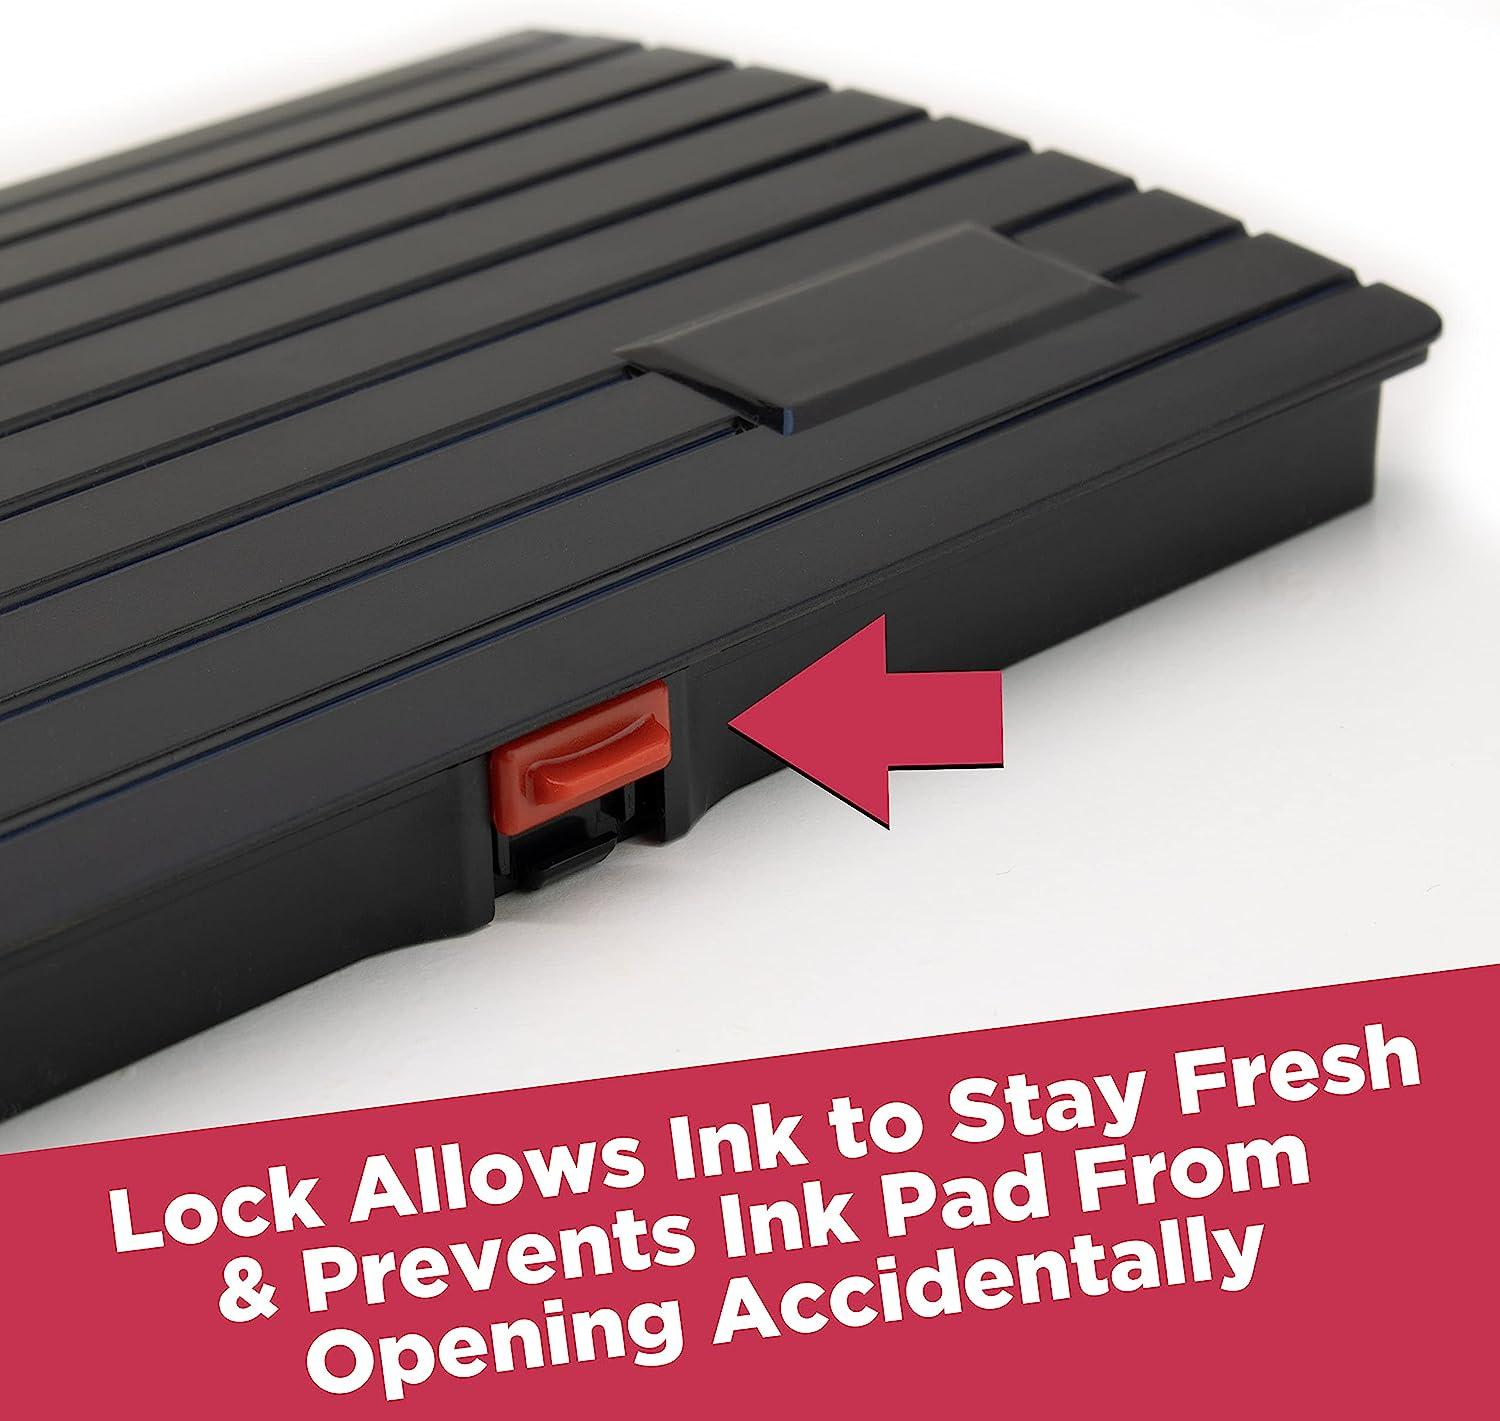 Extra Large Premium Black Ink Stamp Pad - 5 by 7 - Quality Felt Pad